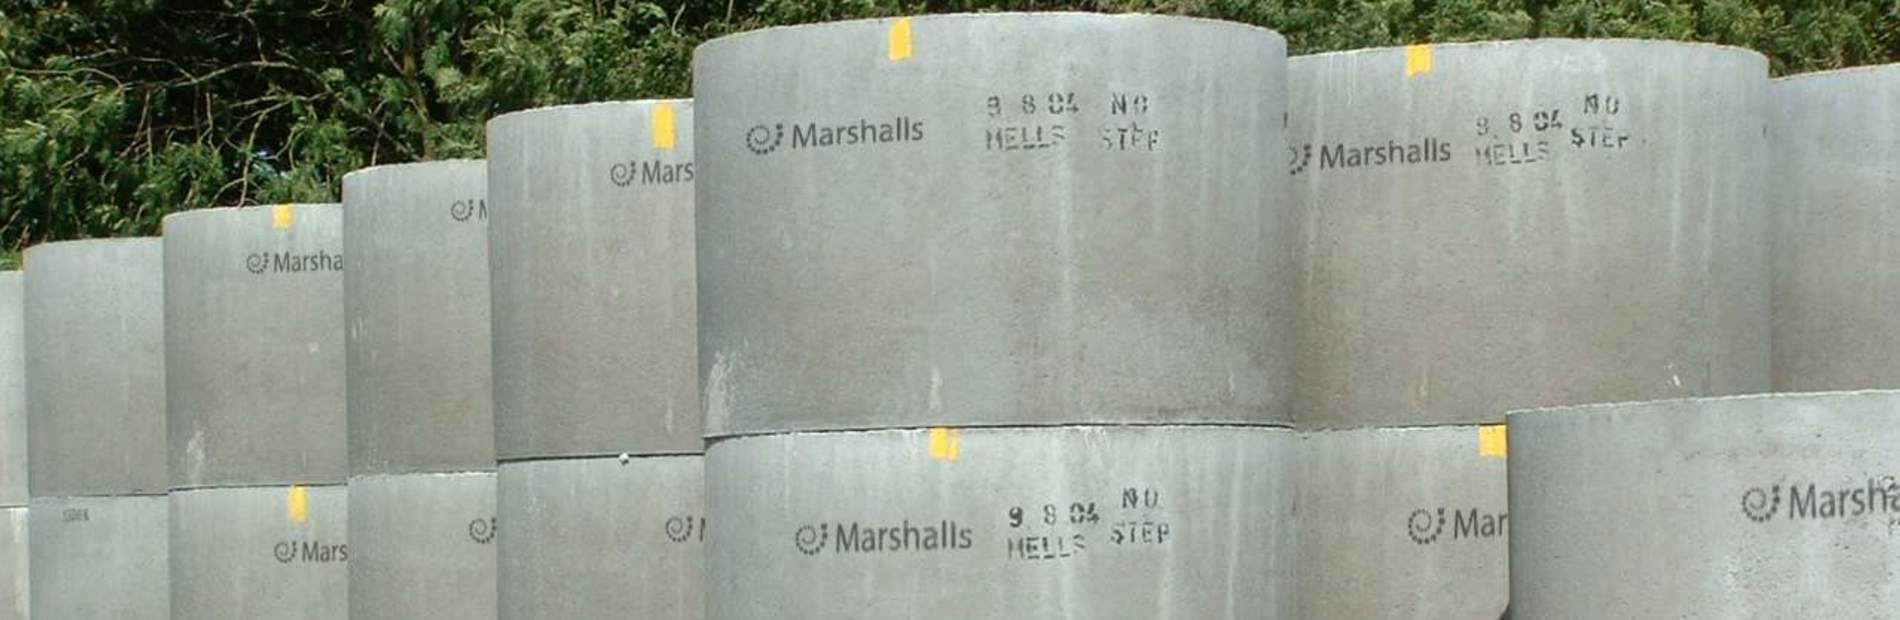 Marshalls traditional manholes